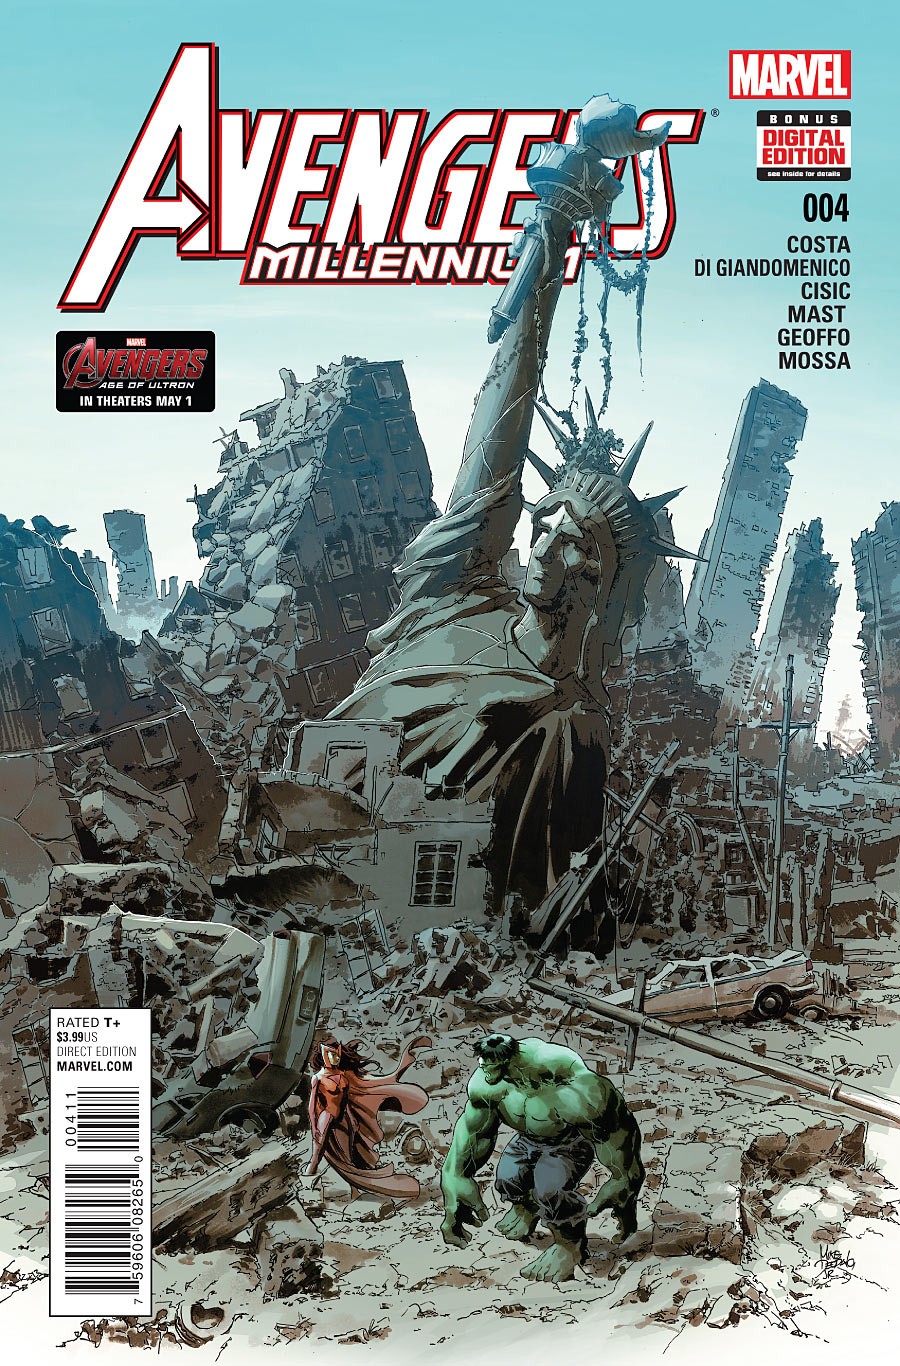 Avengers: Millennium Vol. 1 #4